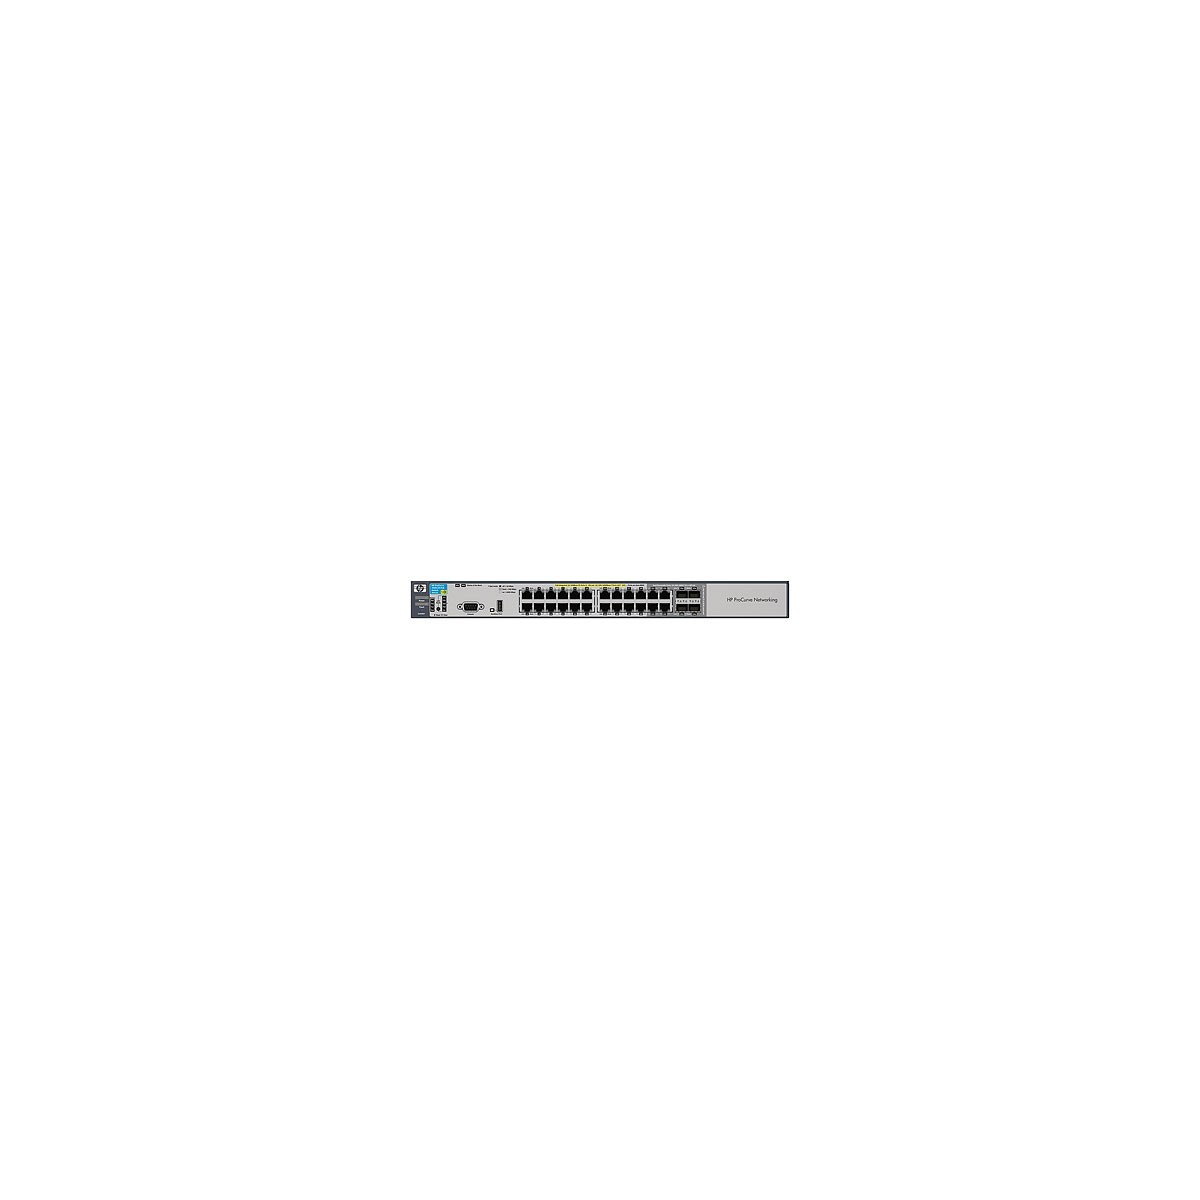 HPE E3500-24-PoE Switch - Managed - Full duplex - Power over Ethernet (PoE)